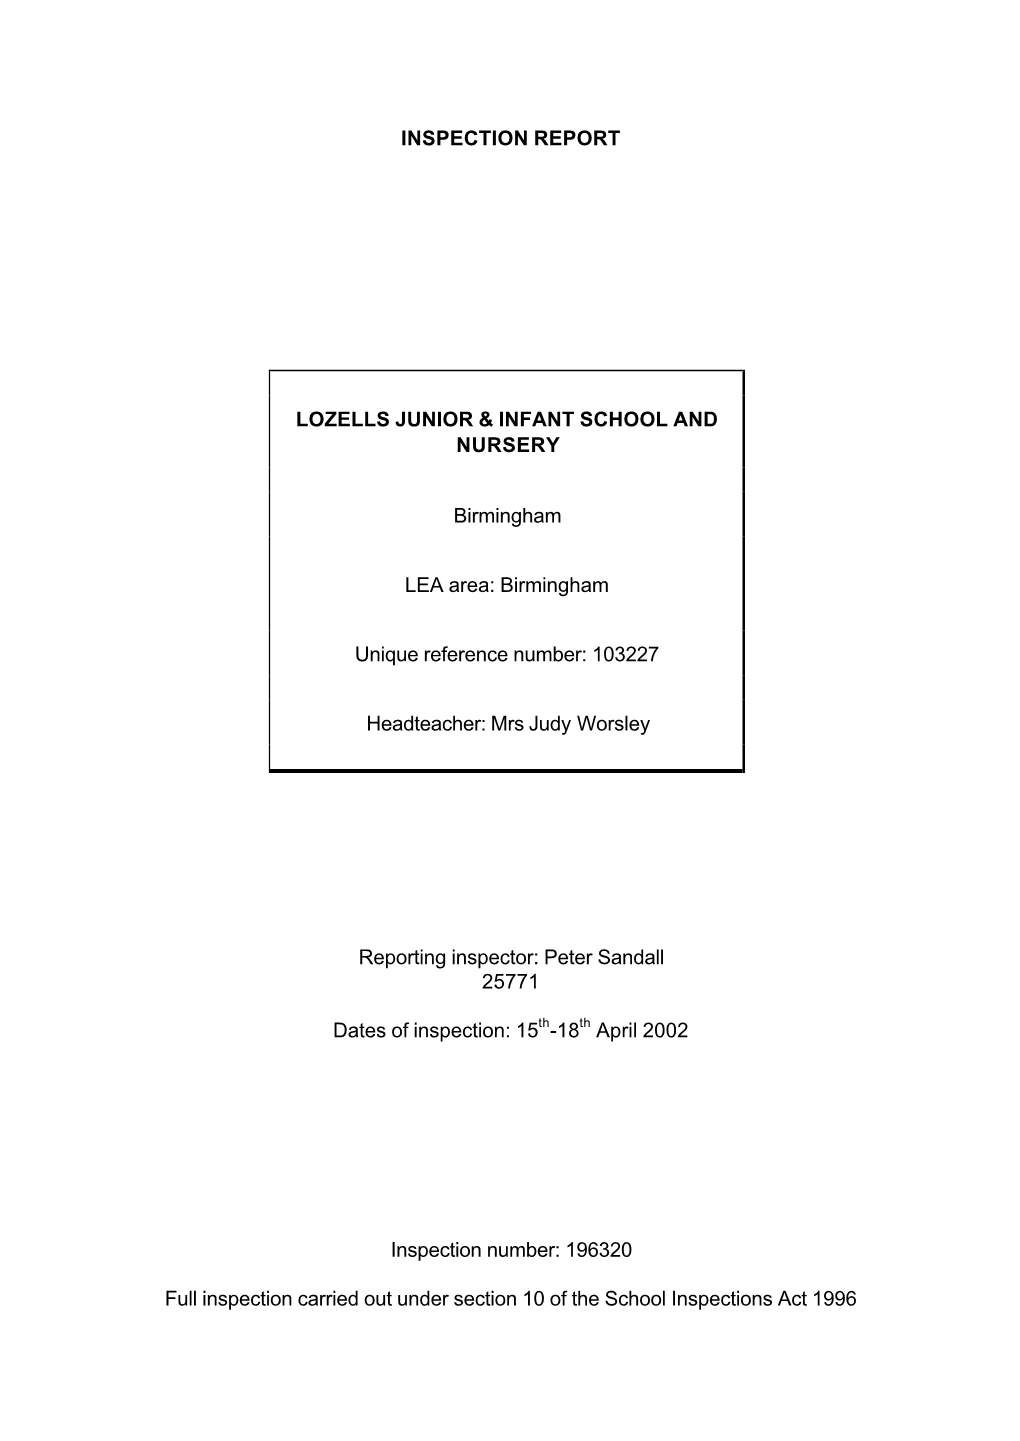 Inspection Report Lozells Junior & Infant School And